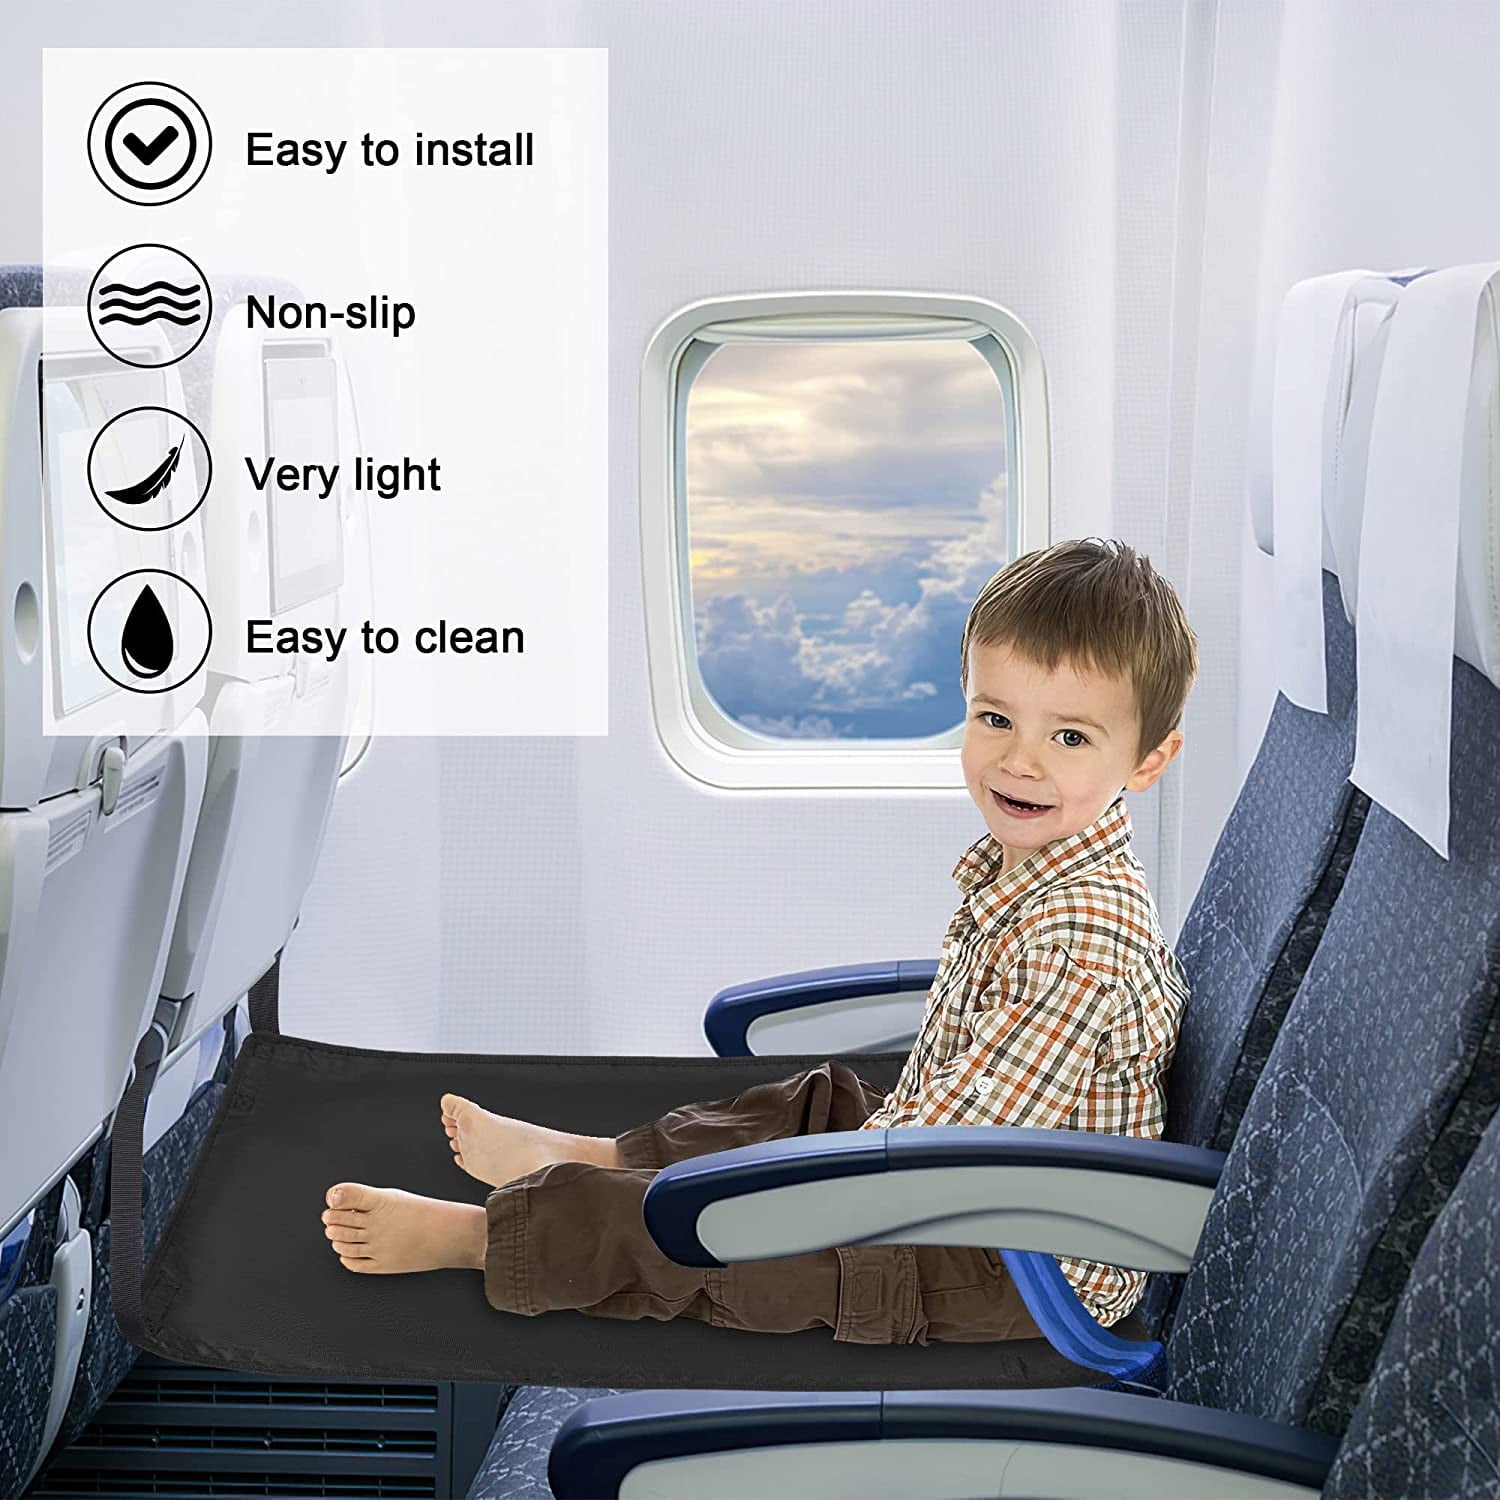 UNARK Airplane Footrest,Travel Toddler Bed,Portable Toddler Bed for Travel,Travel Foot Rest for Airplane Flights,Toddler Airplane Bed,Airplane Seat